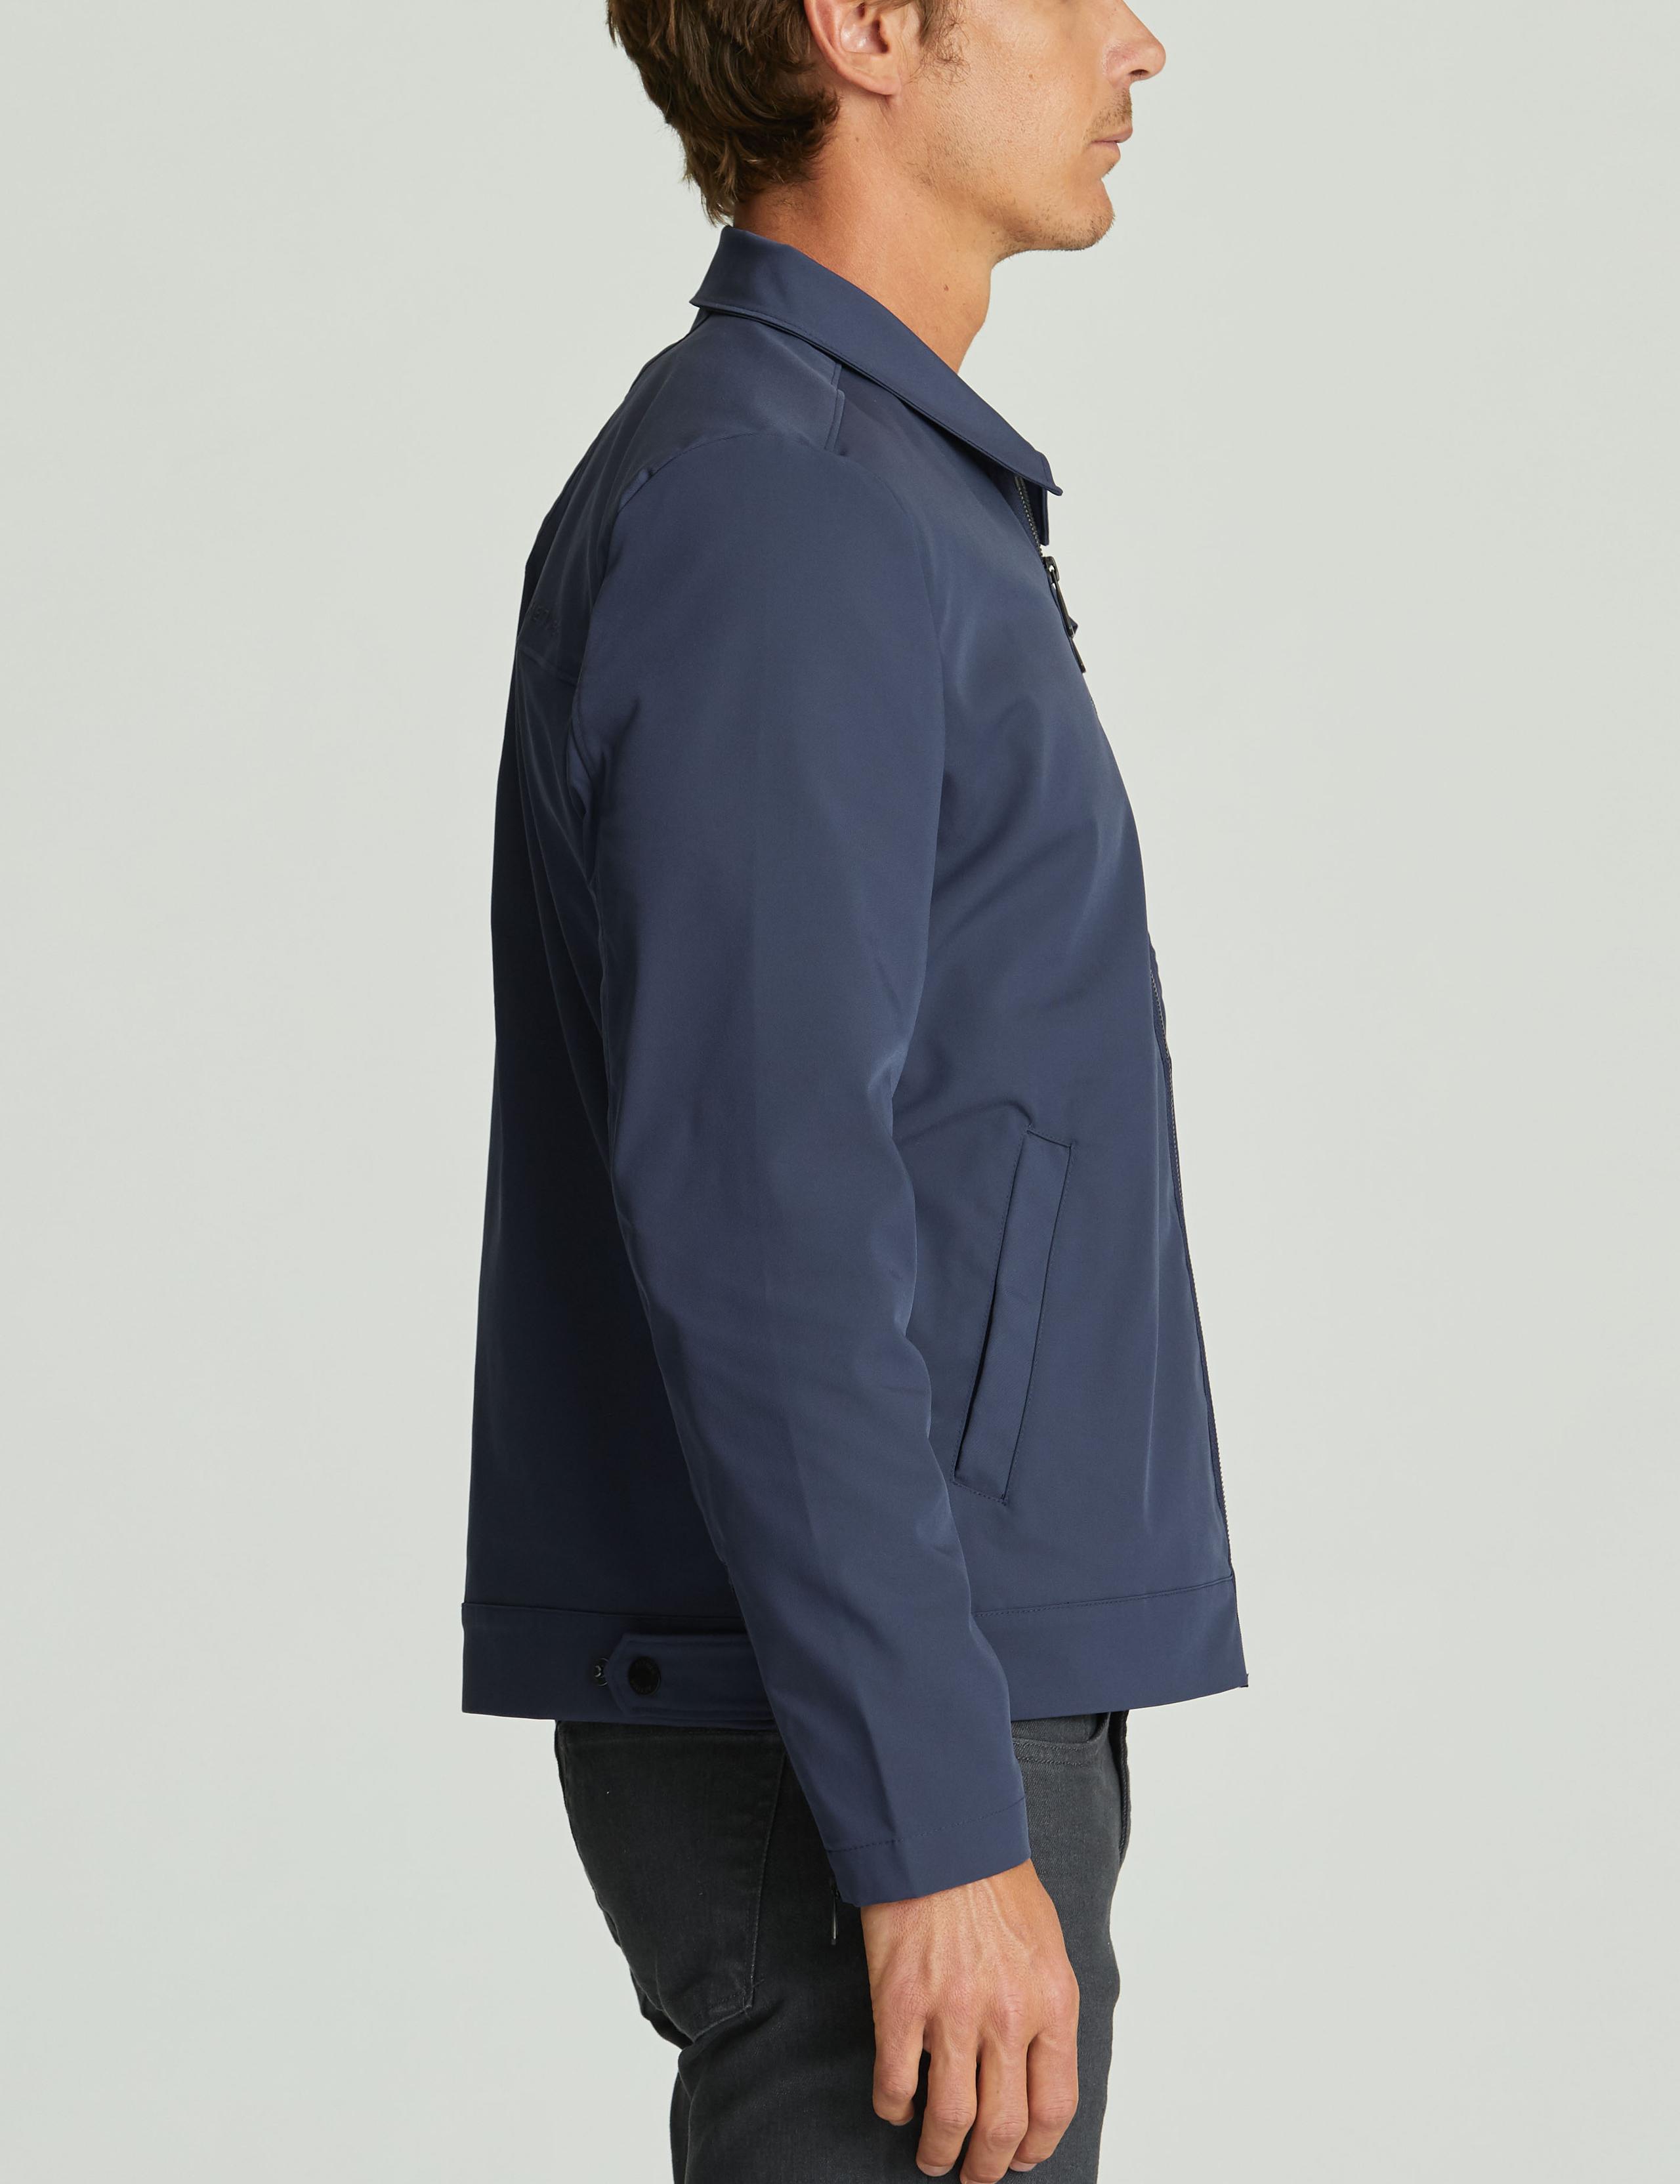 Profile view of man wearing Fleet Jacket